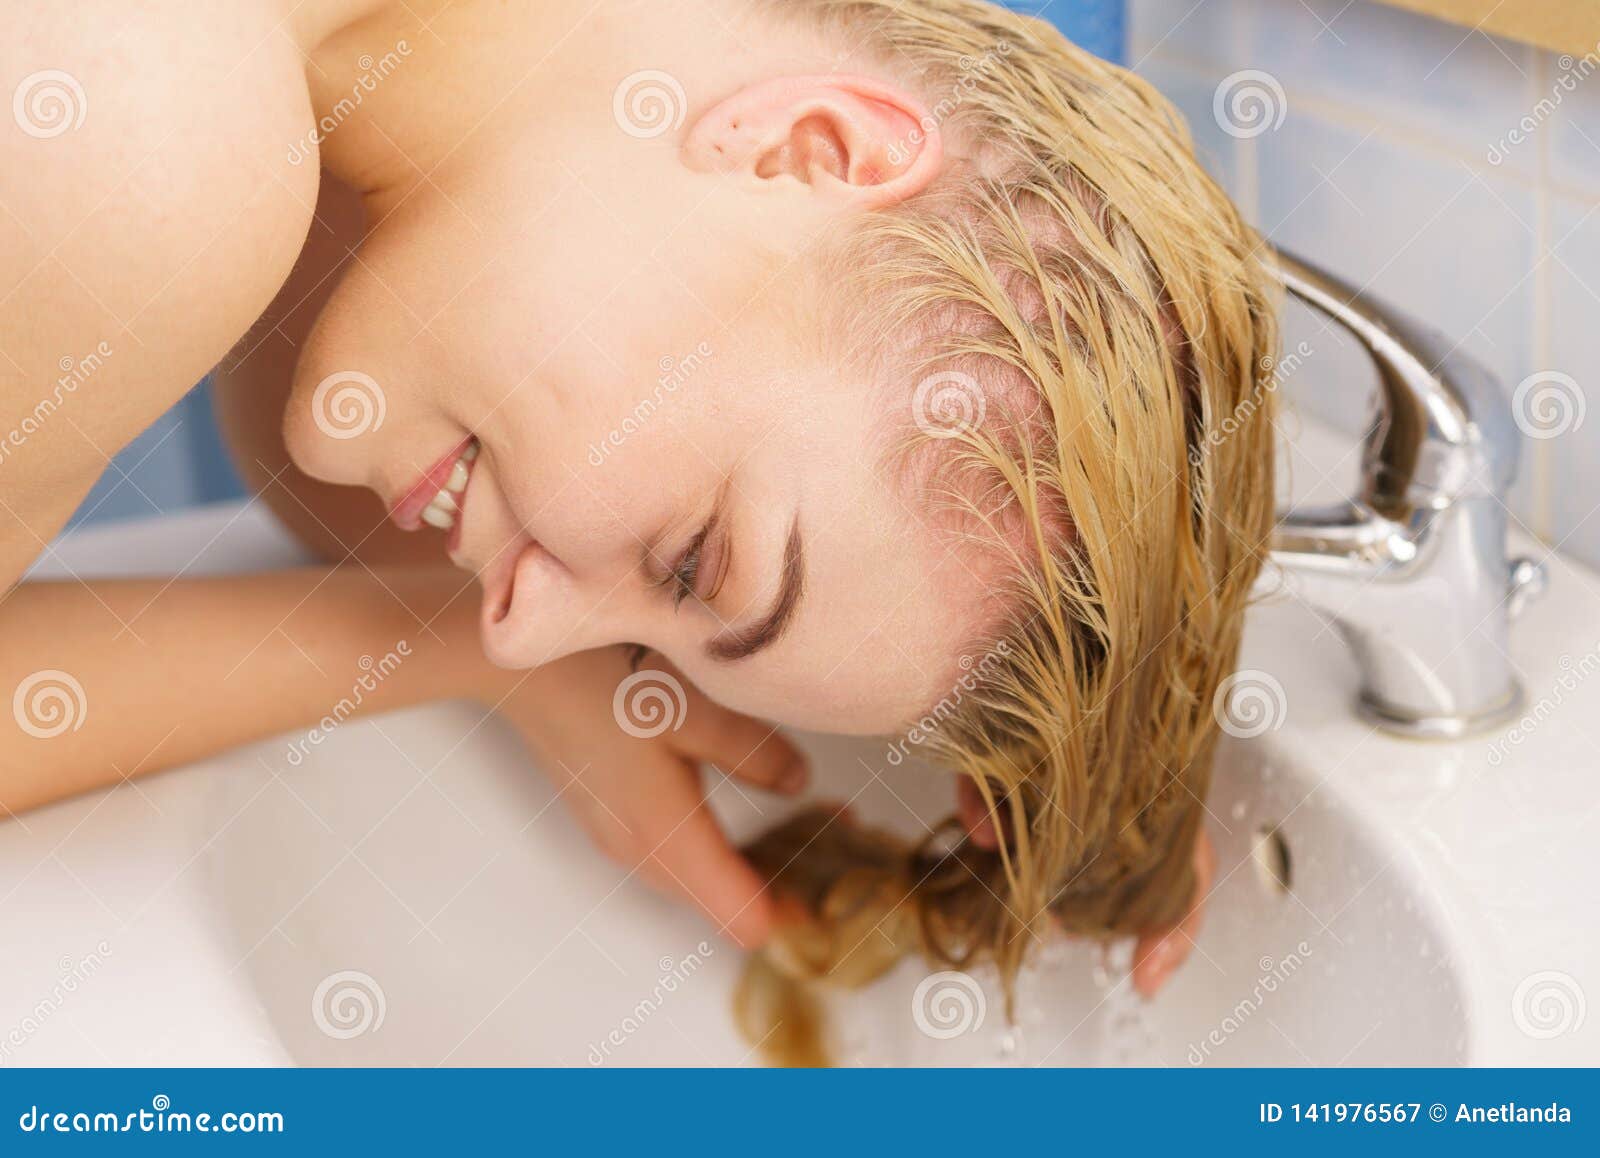 Woman Washing Hair In Bathroom Sink Stock Image Image Of